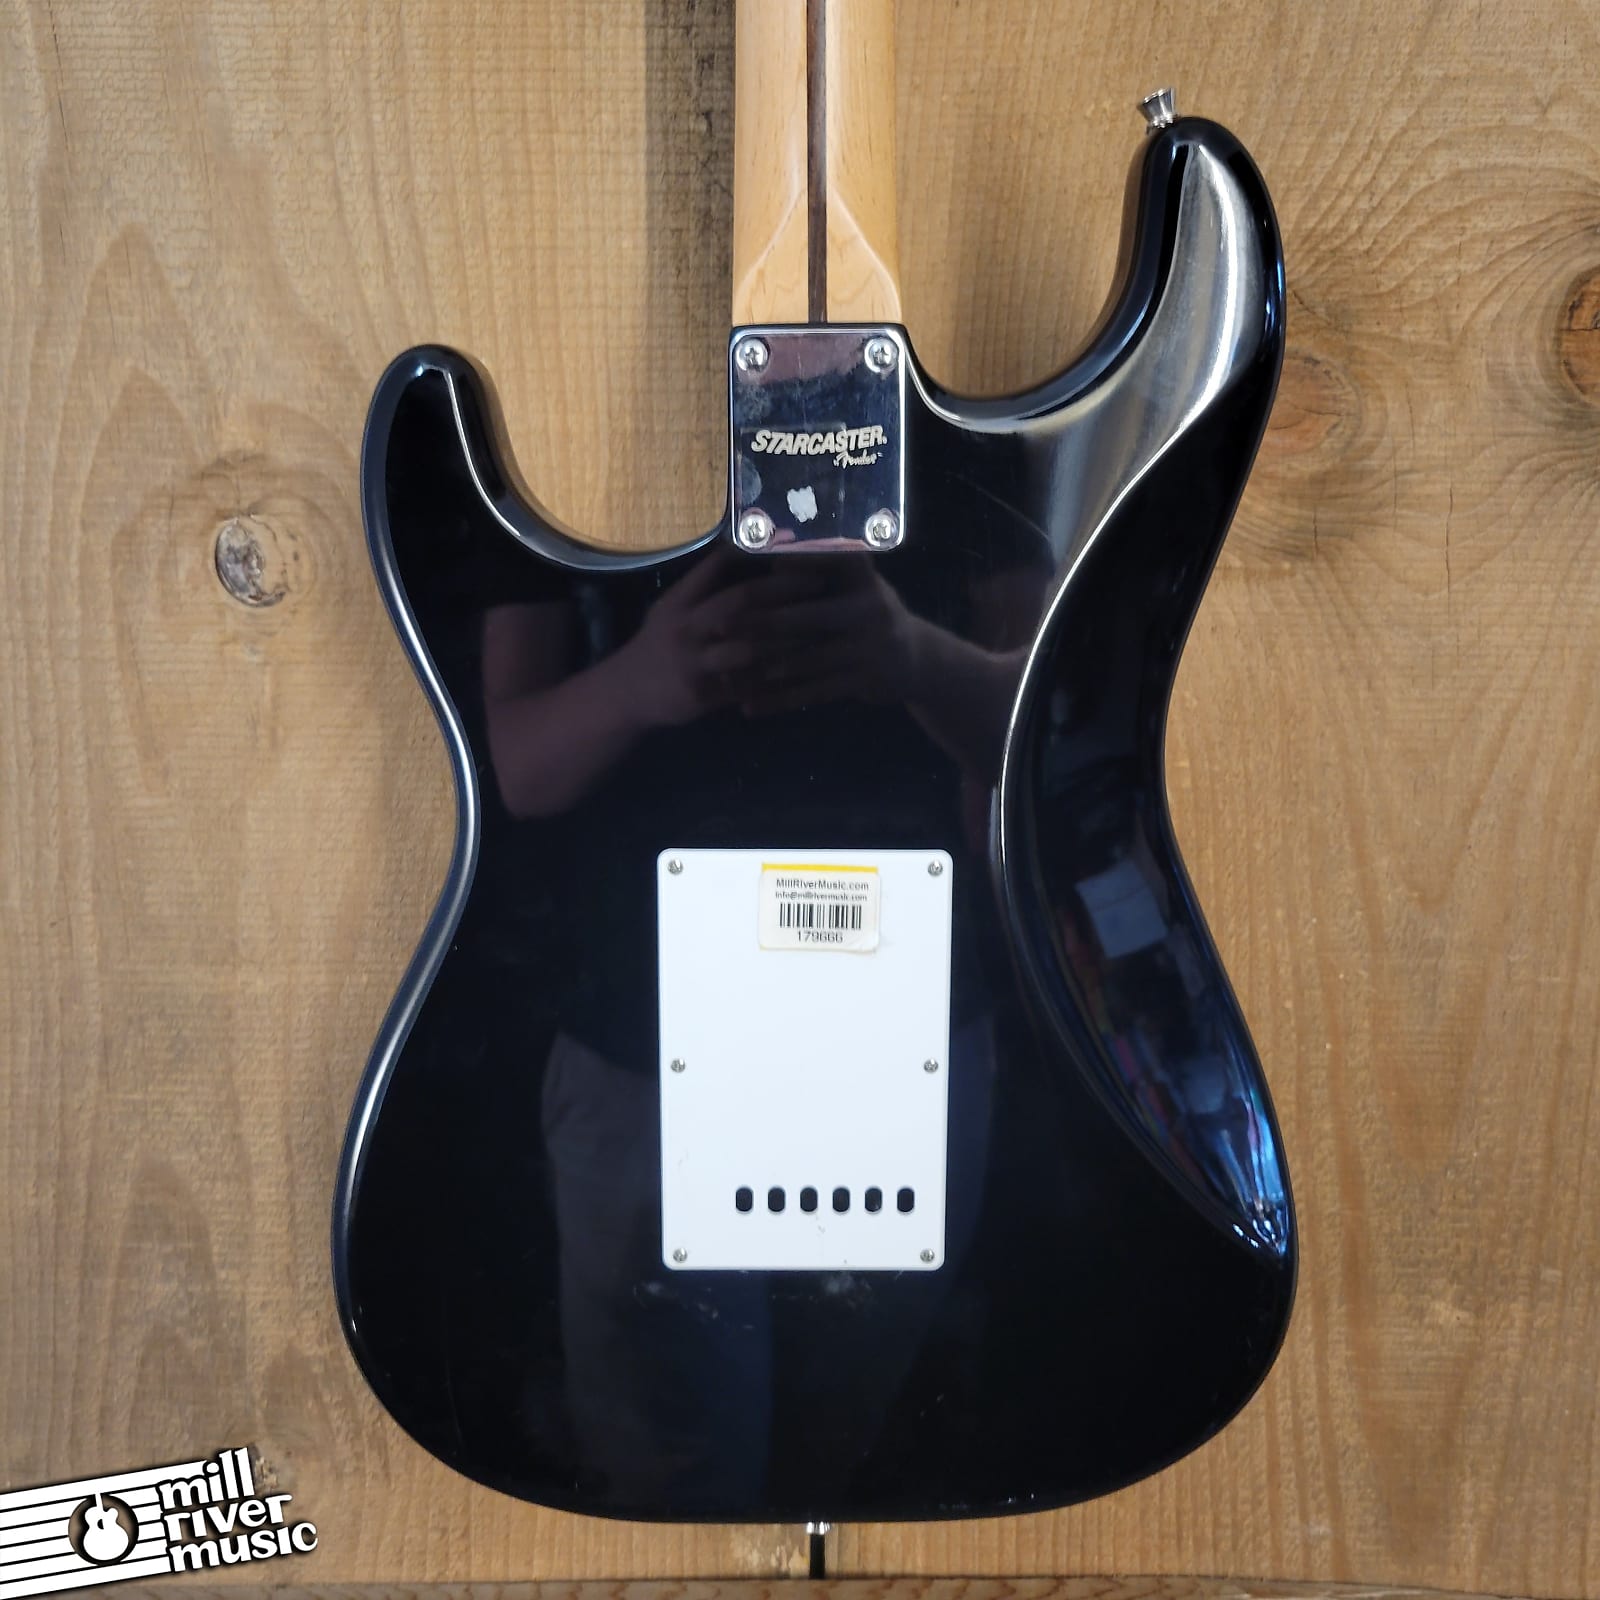 Fender Starcaster Electric Guitar Black Used